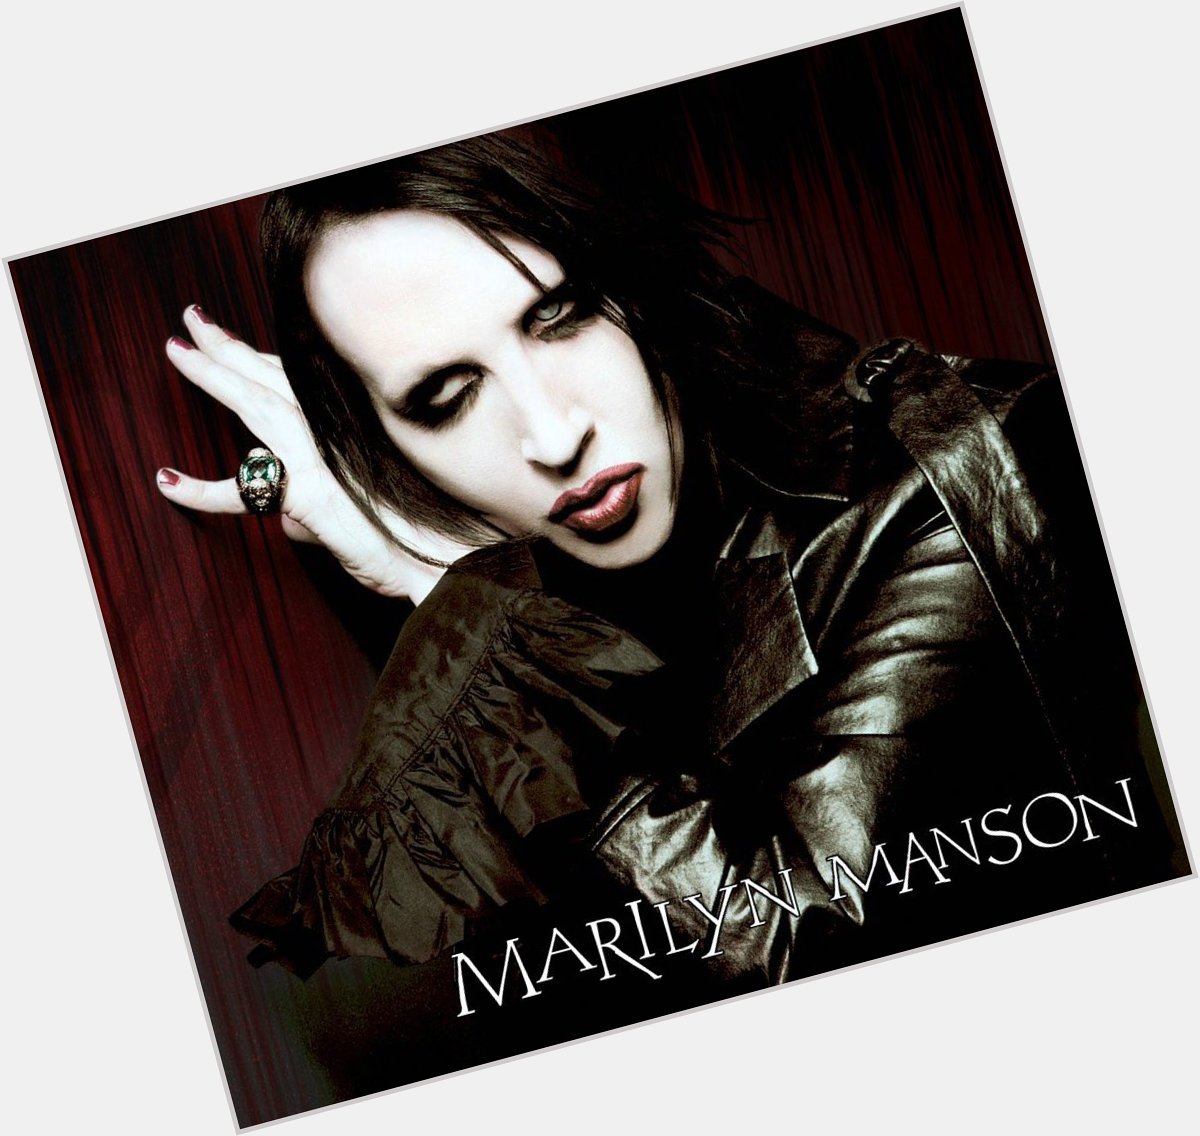                               Marilyn Manson Happy Birthday 